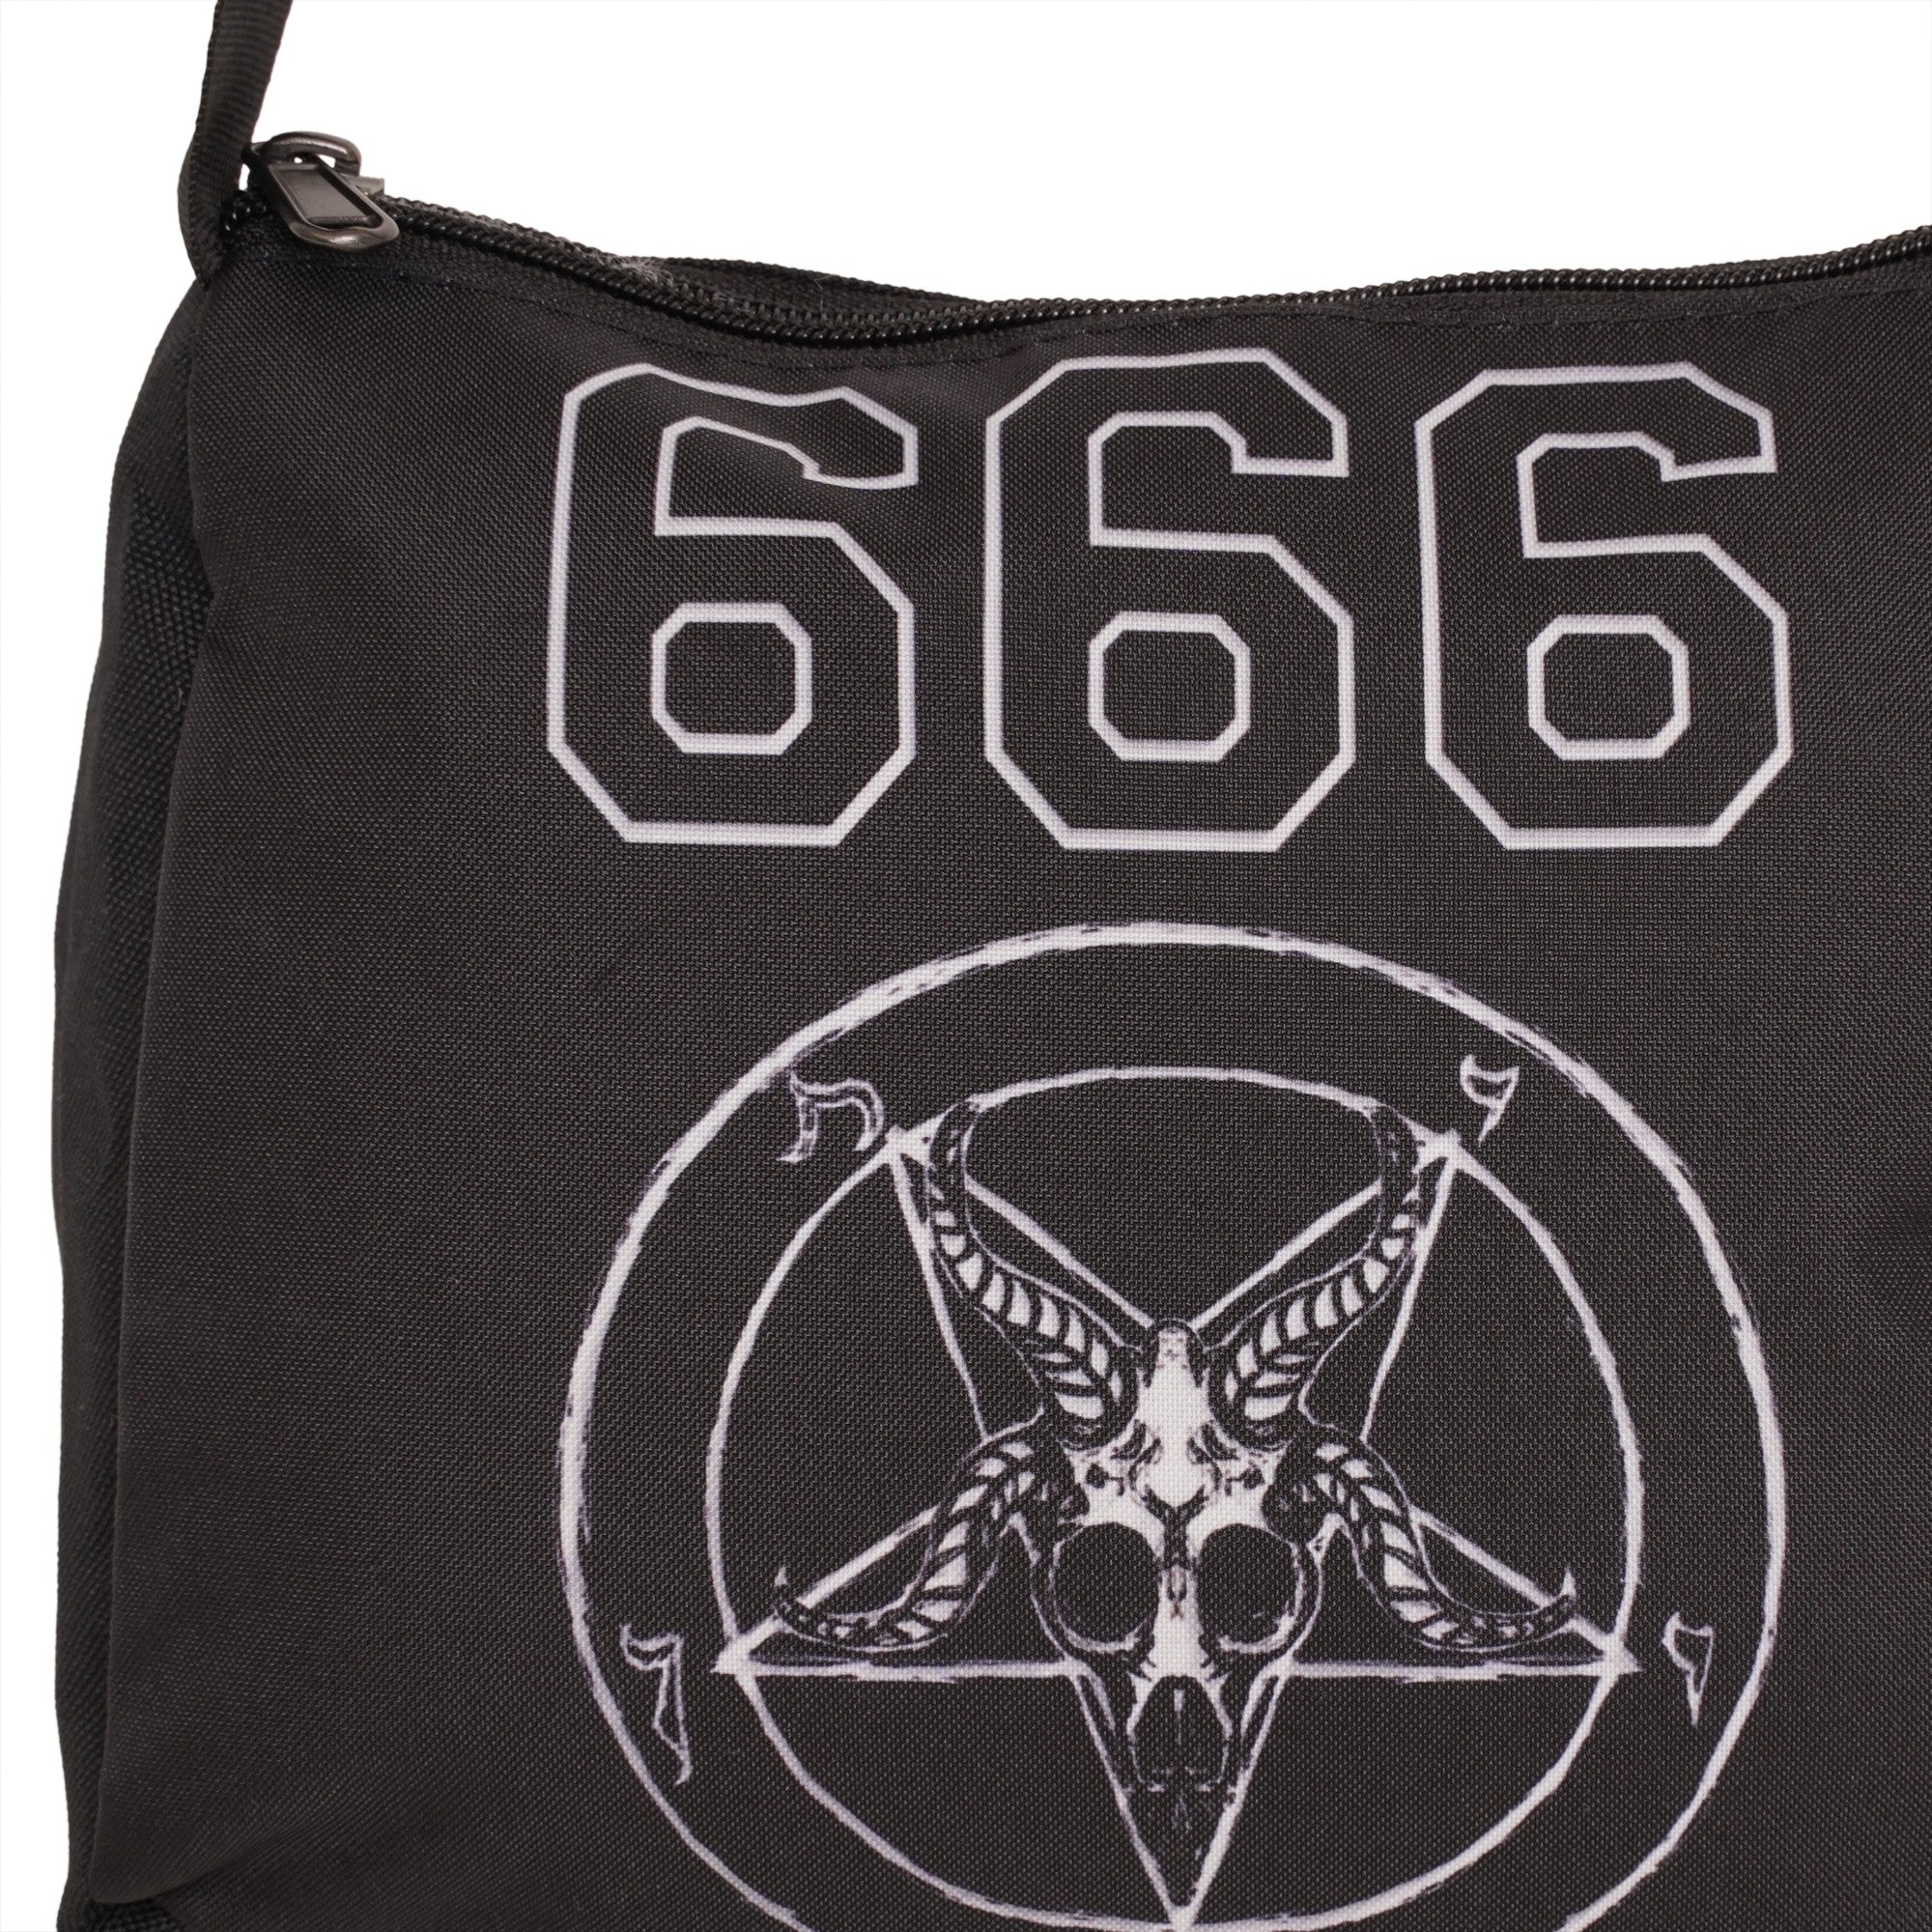 Ro Rox Small Handbag Makeup Cute Purse, Black, 666